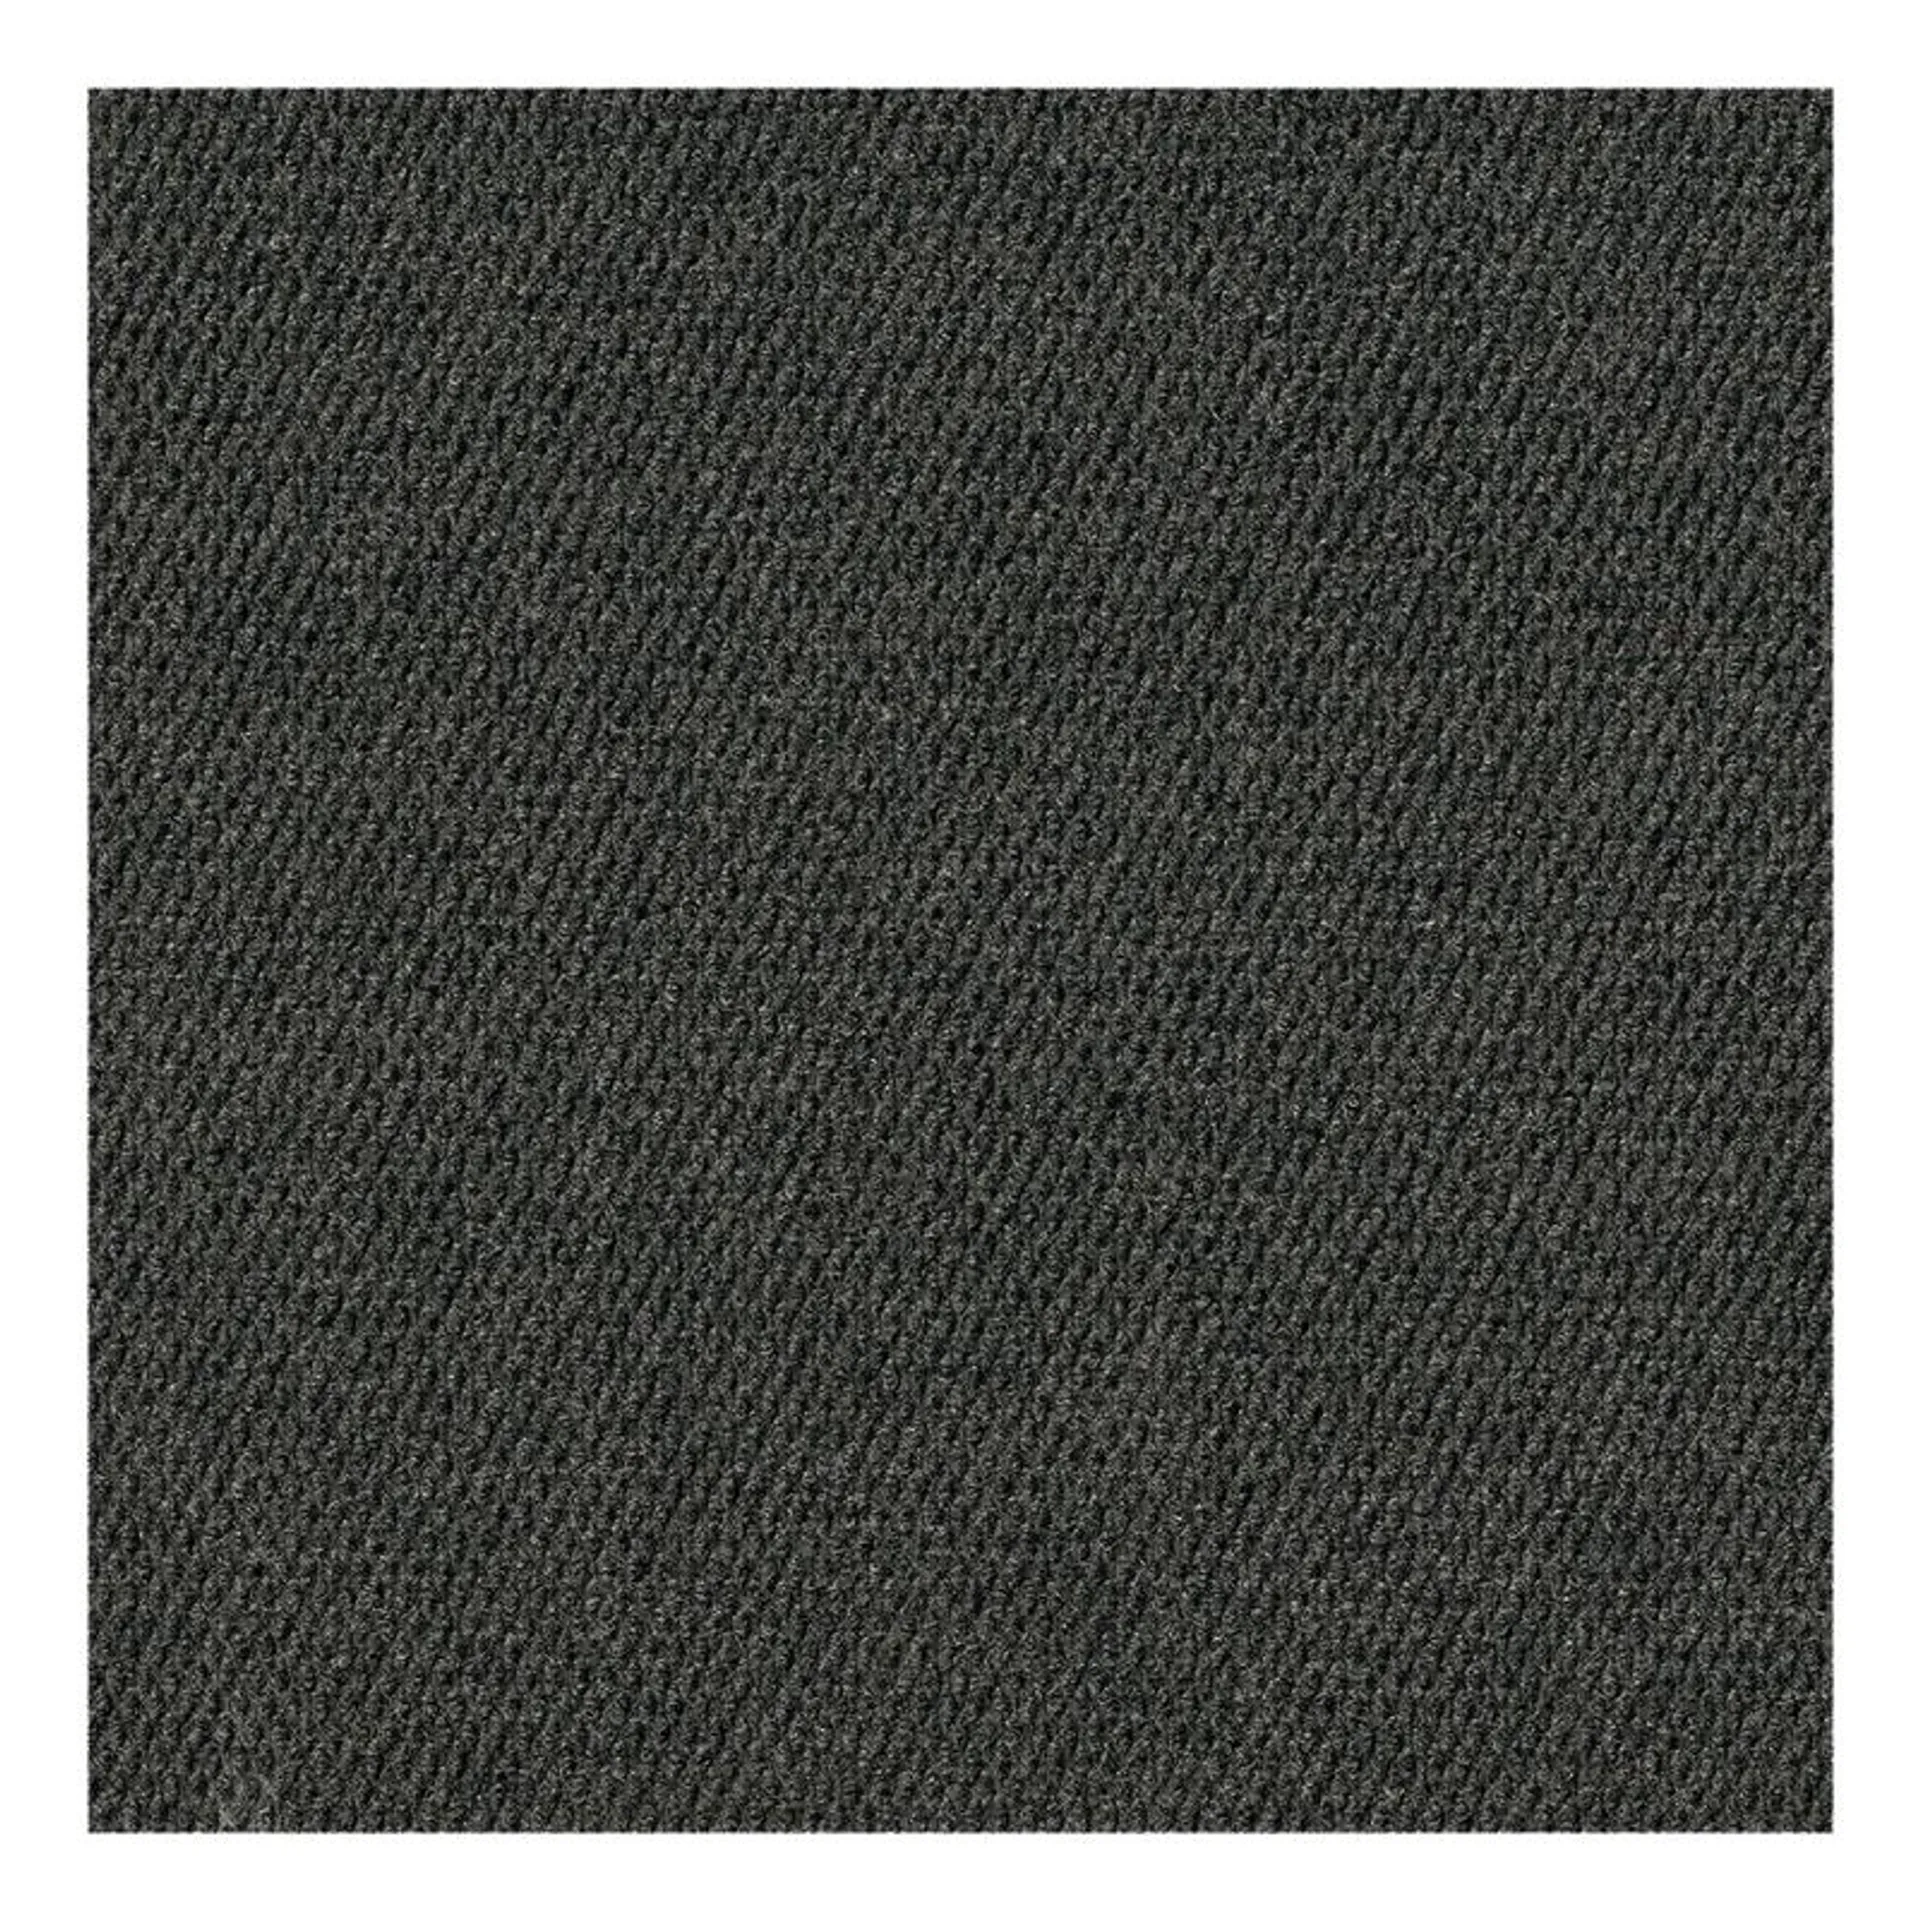 7ND4N0916PK Carpet Tile, 18 in L Tile, 18 in W Tile, Hobnail Pattern, Pattern, Black Ice